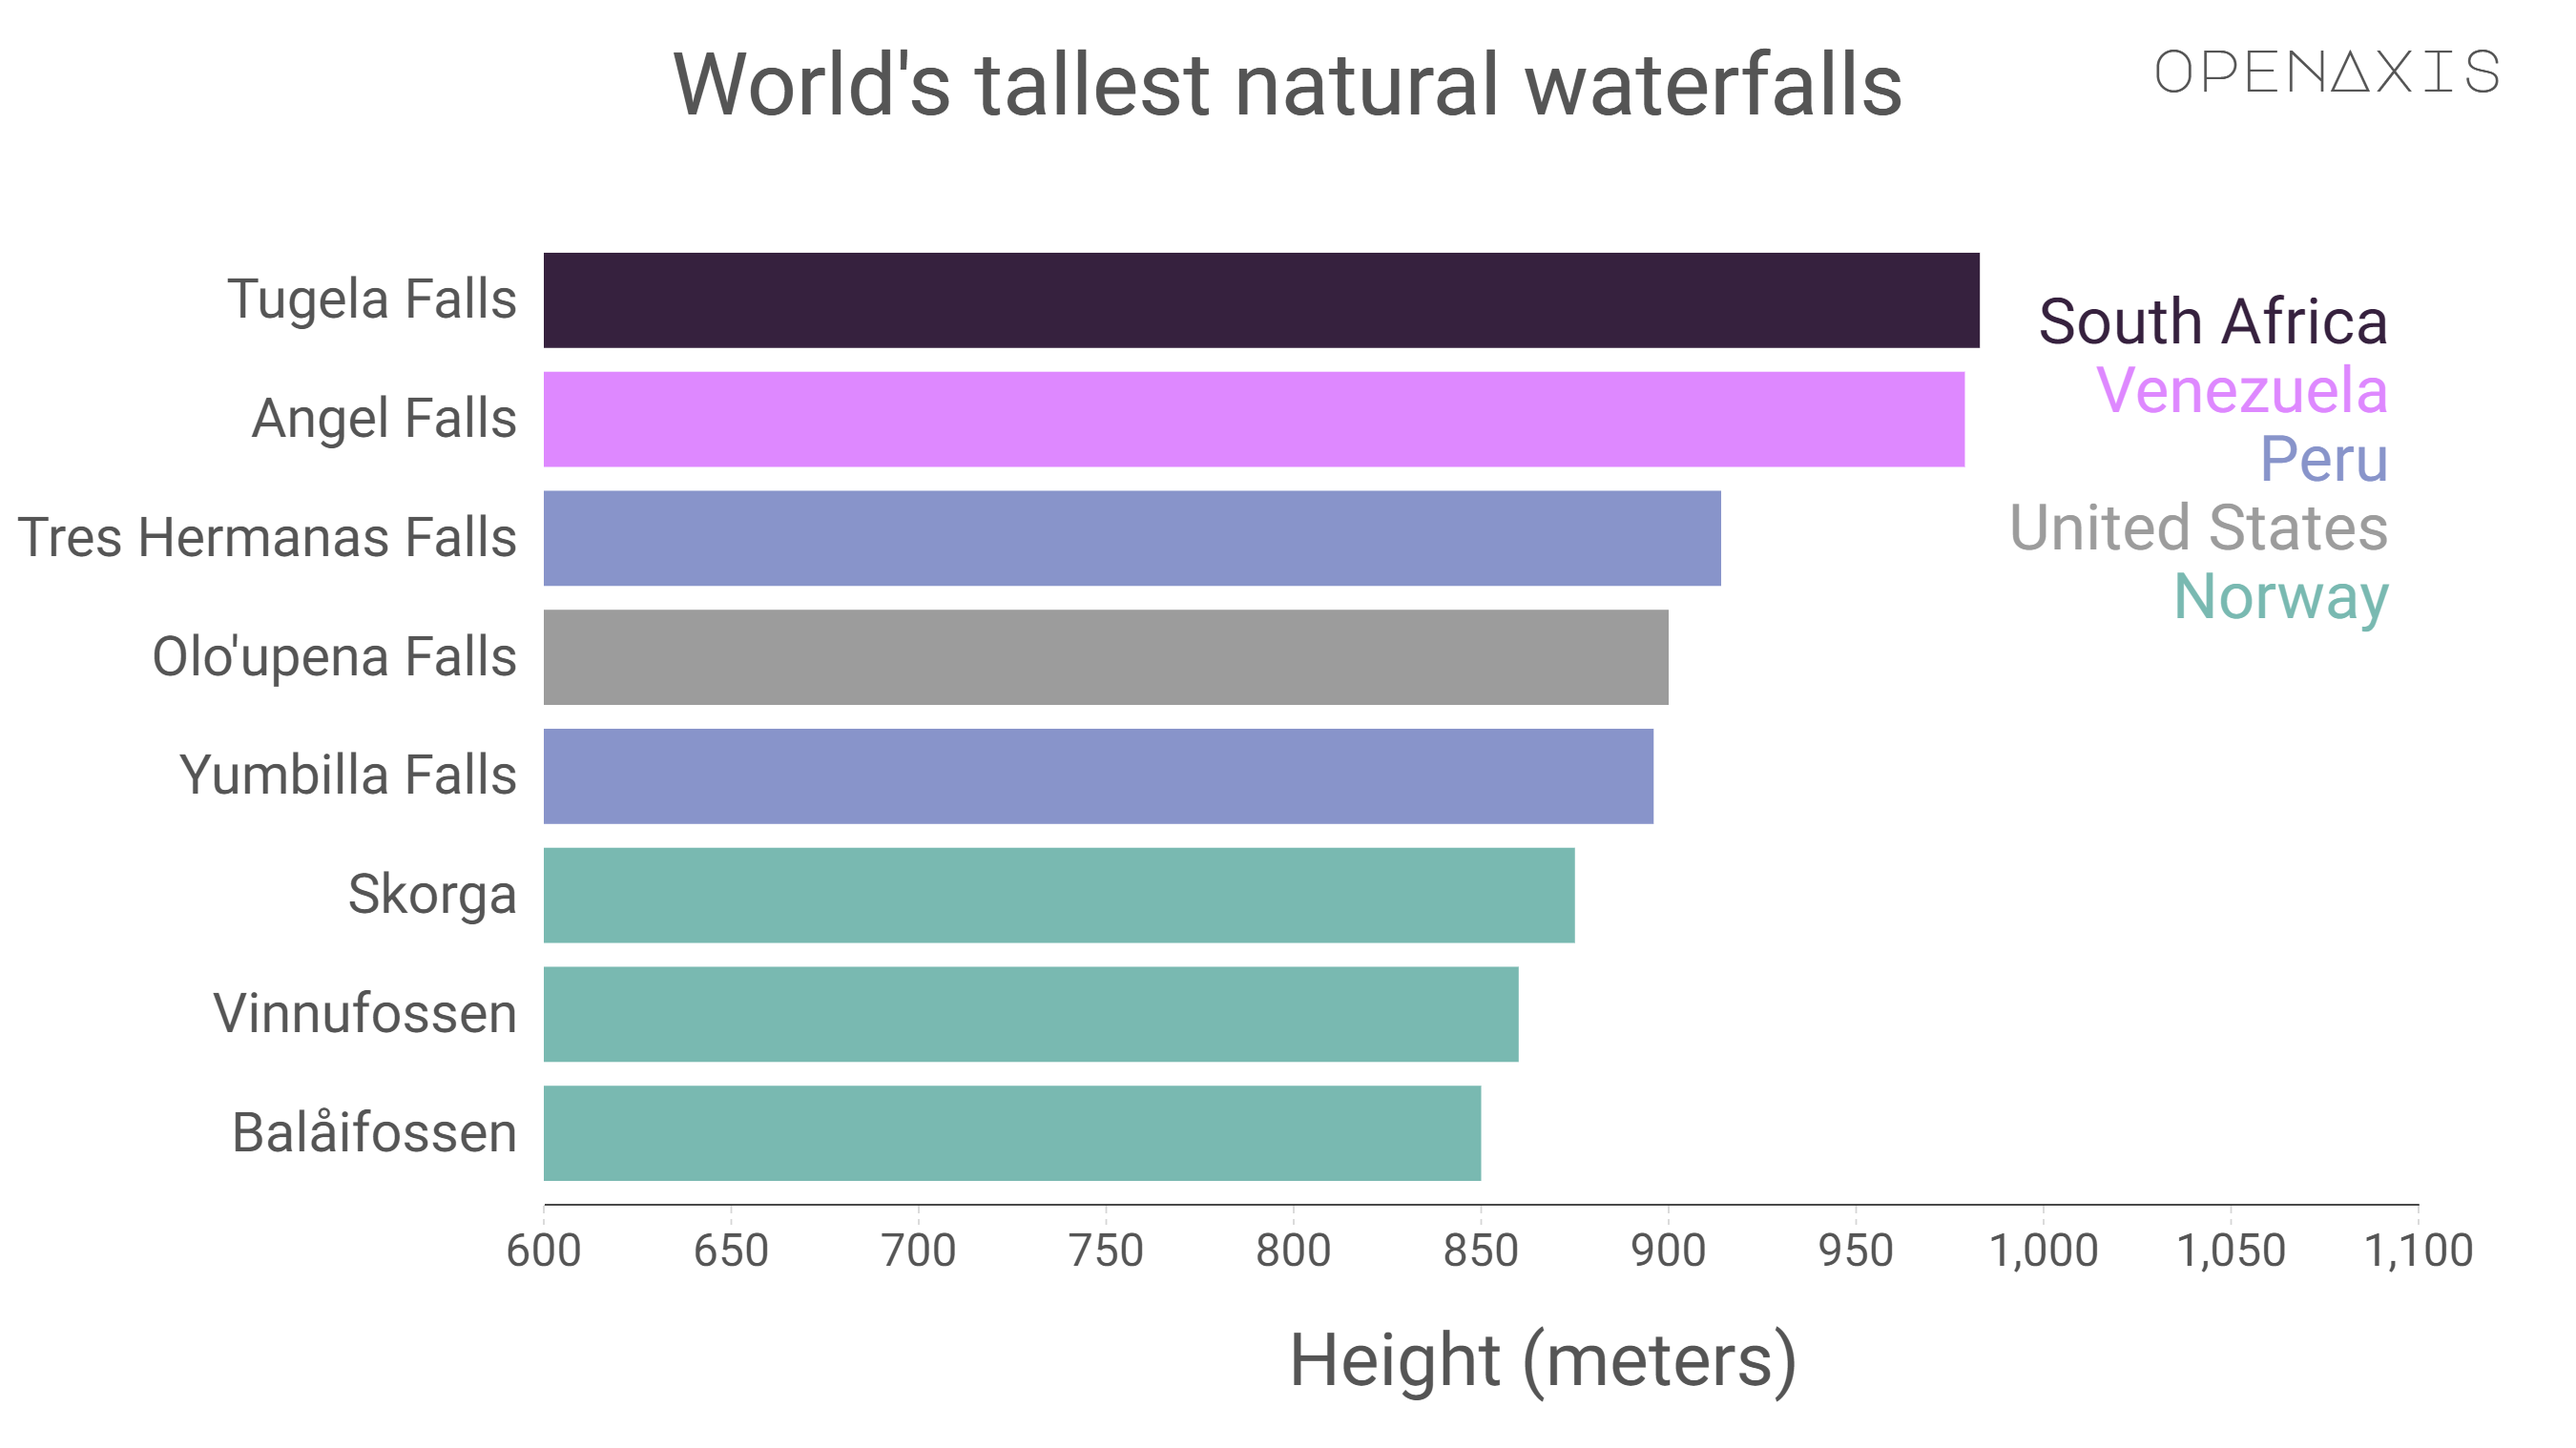 "World's tallest natural waterfalls"